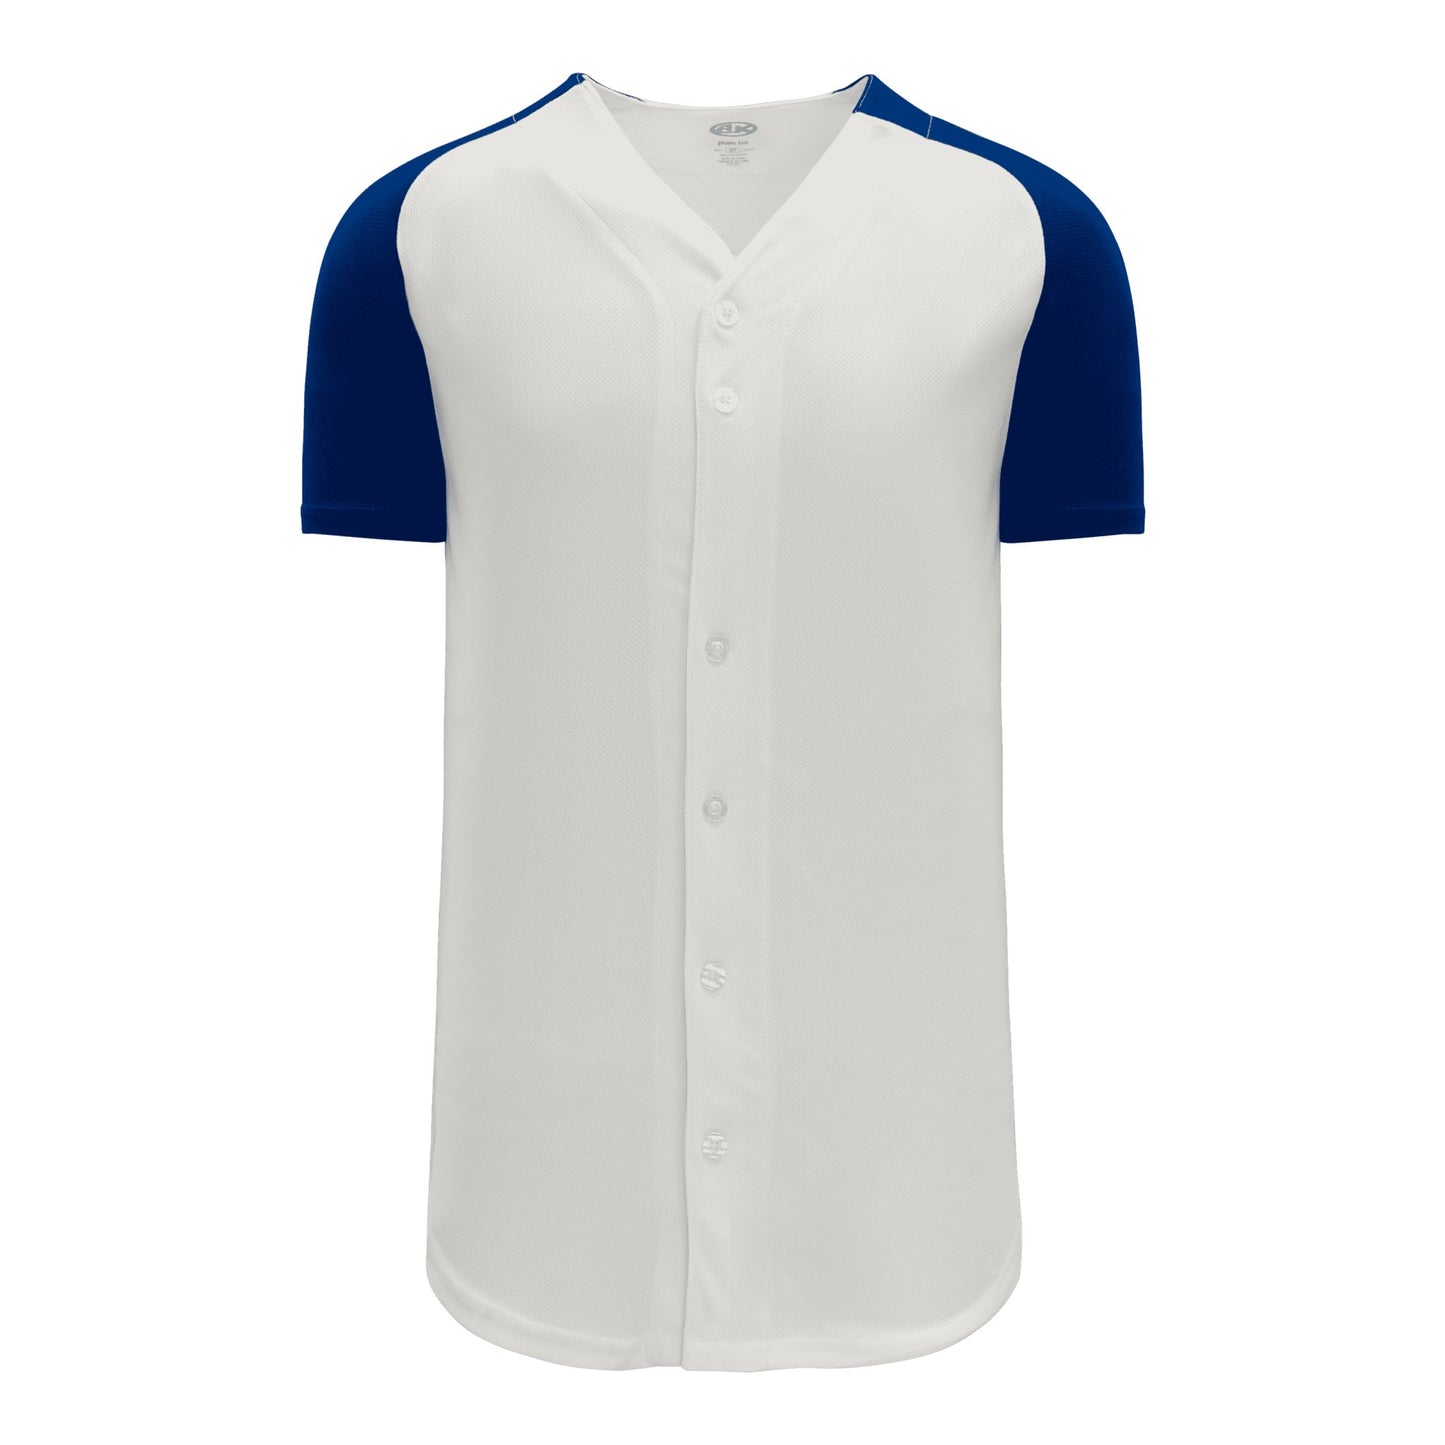 Full Button Baseball Jerseys: Team Patterns 2, Youth Cut